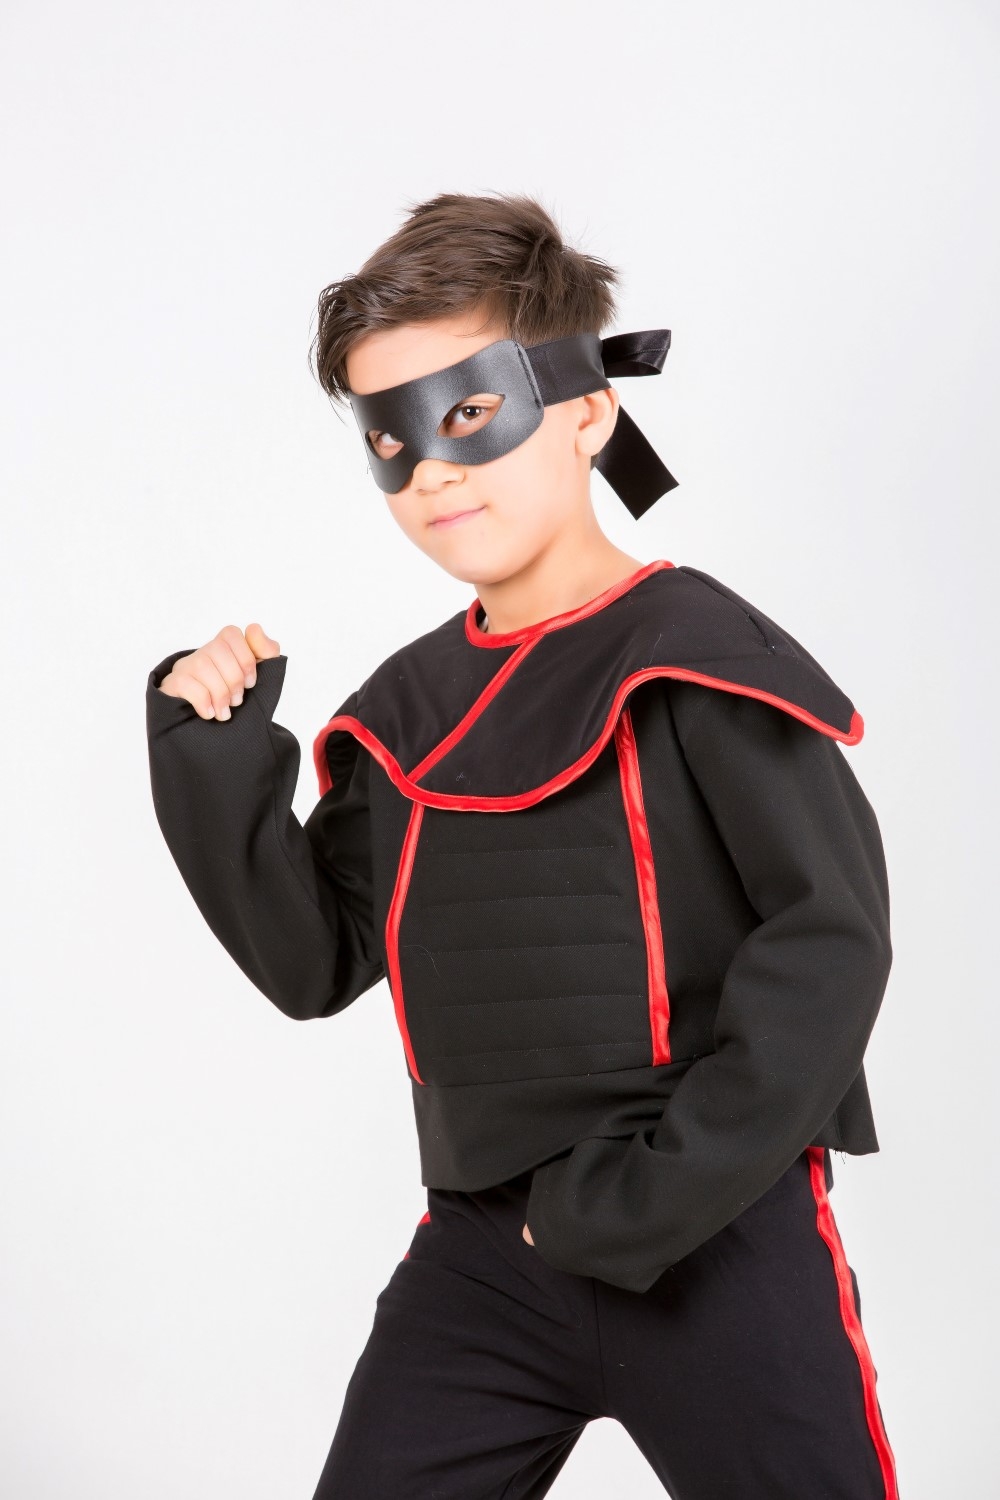 Ninja-Kostum